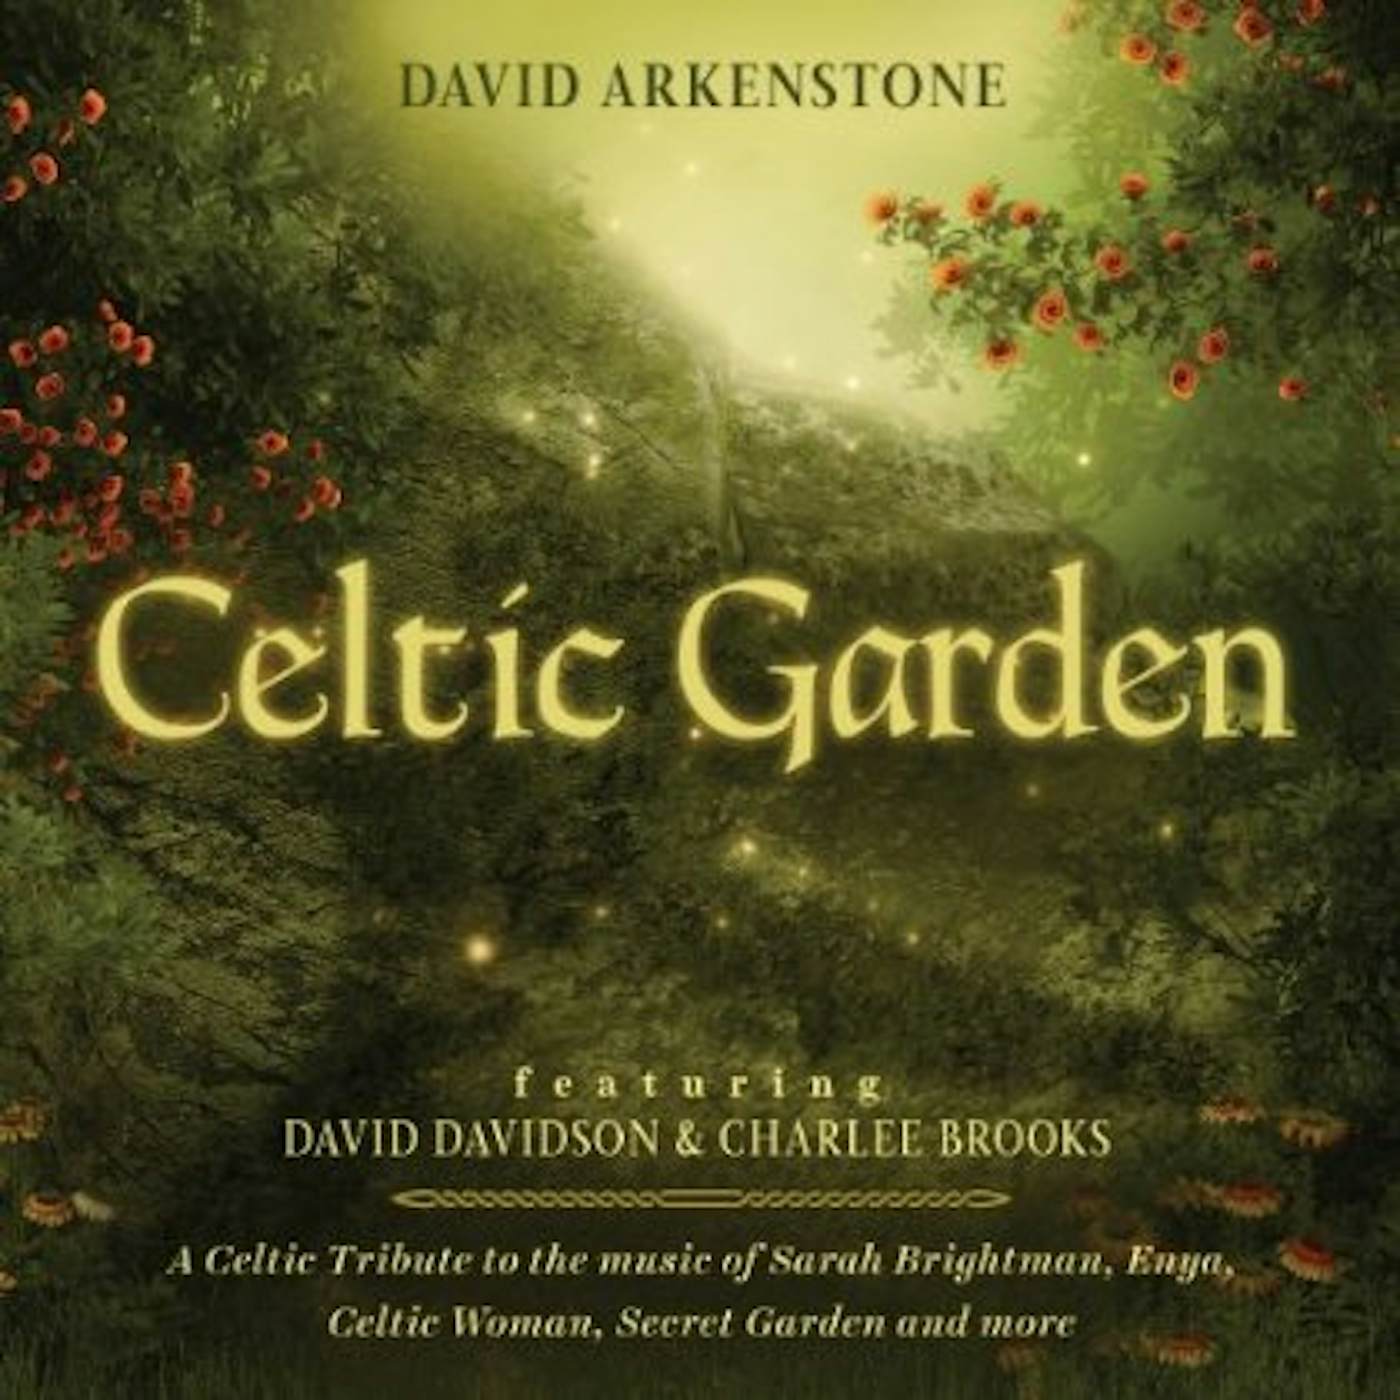 David Arkenstone CELTIC GARDE CD